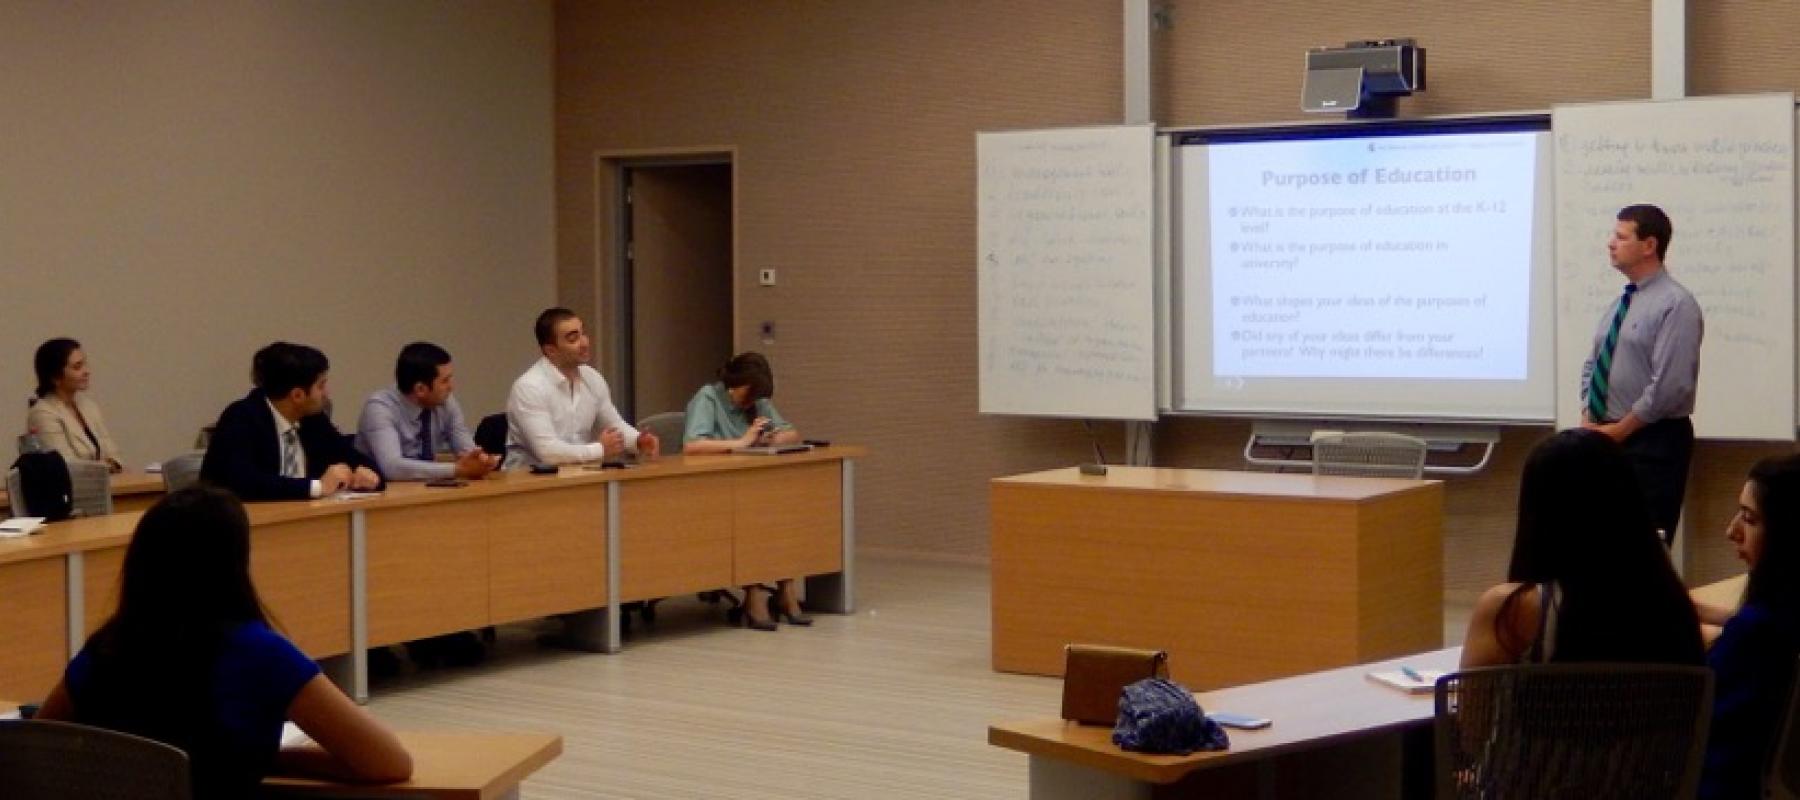 Dr. Wawrzynski faciltating class discussion